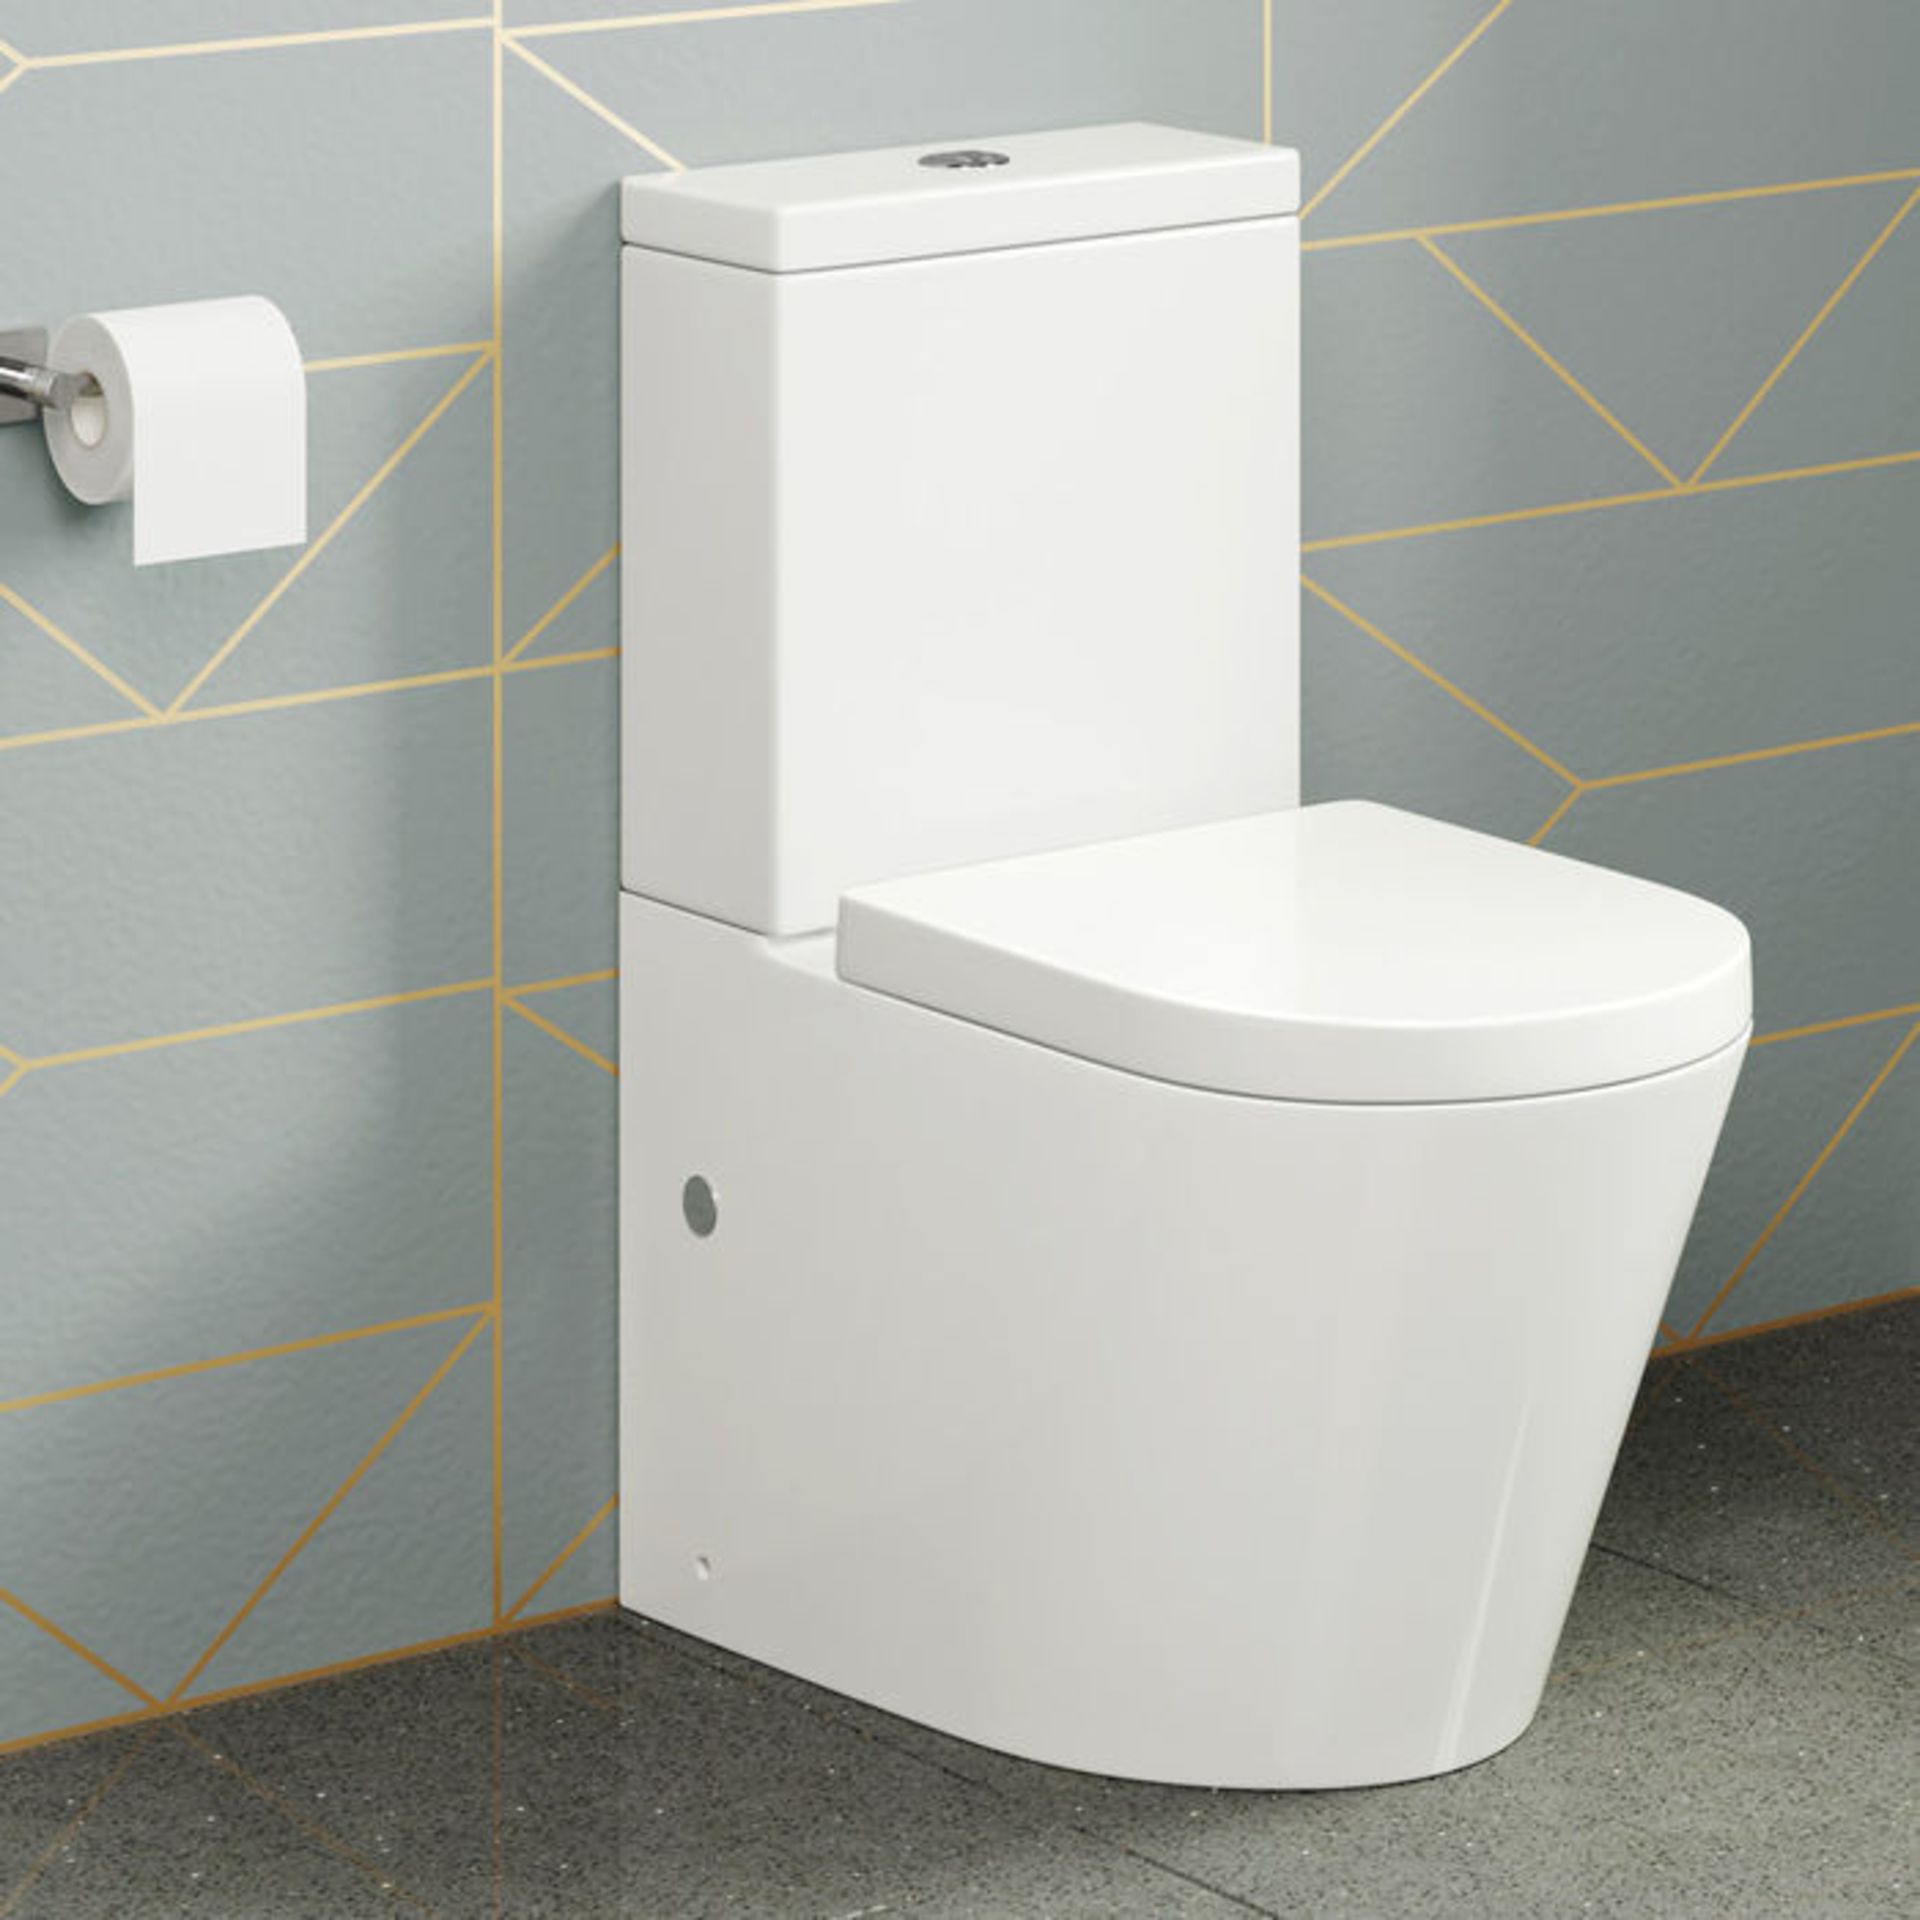 (GR29) Lyon II Close Coupled Toilet & Cistern inc Luxury Soft Close Seat. Lyon is a gorgeous,